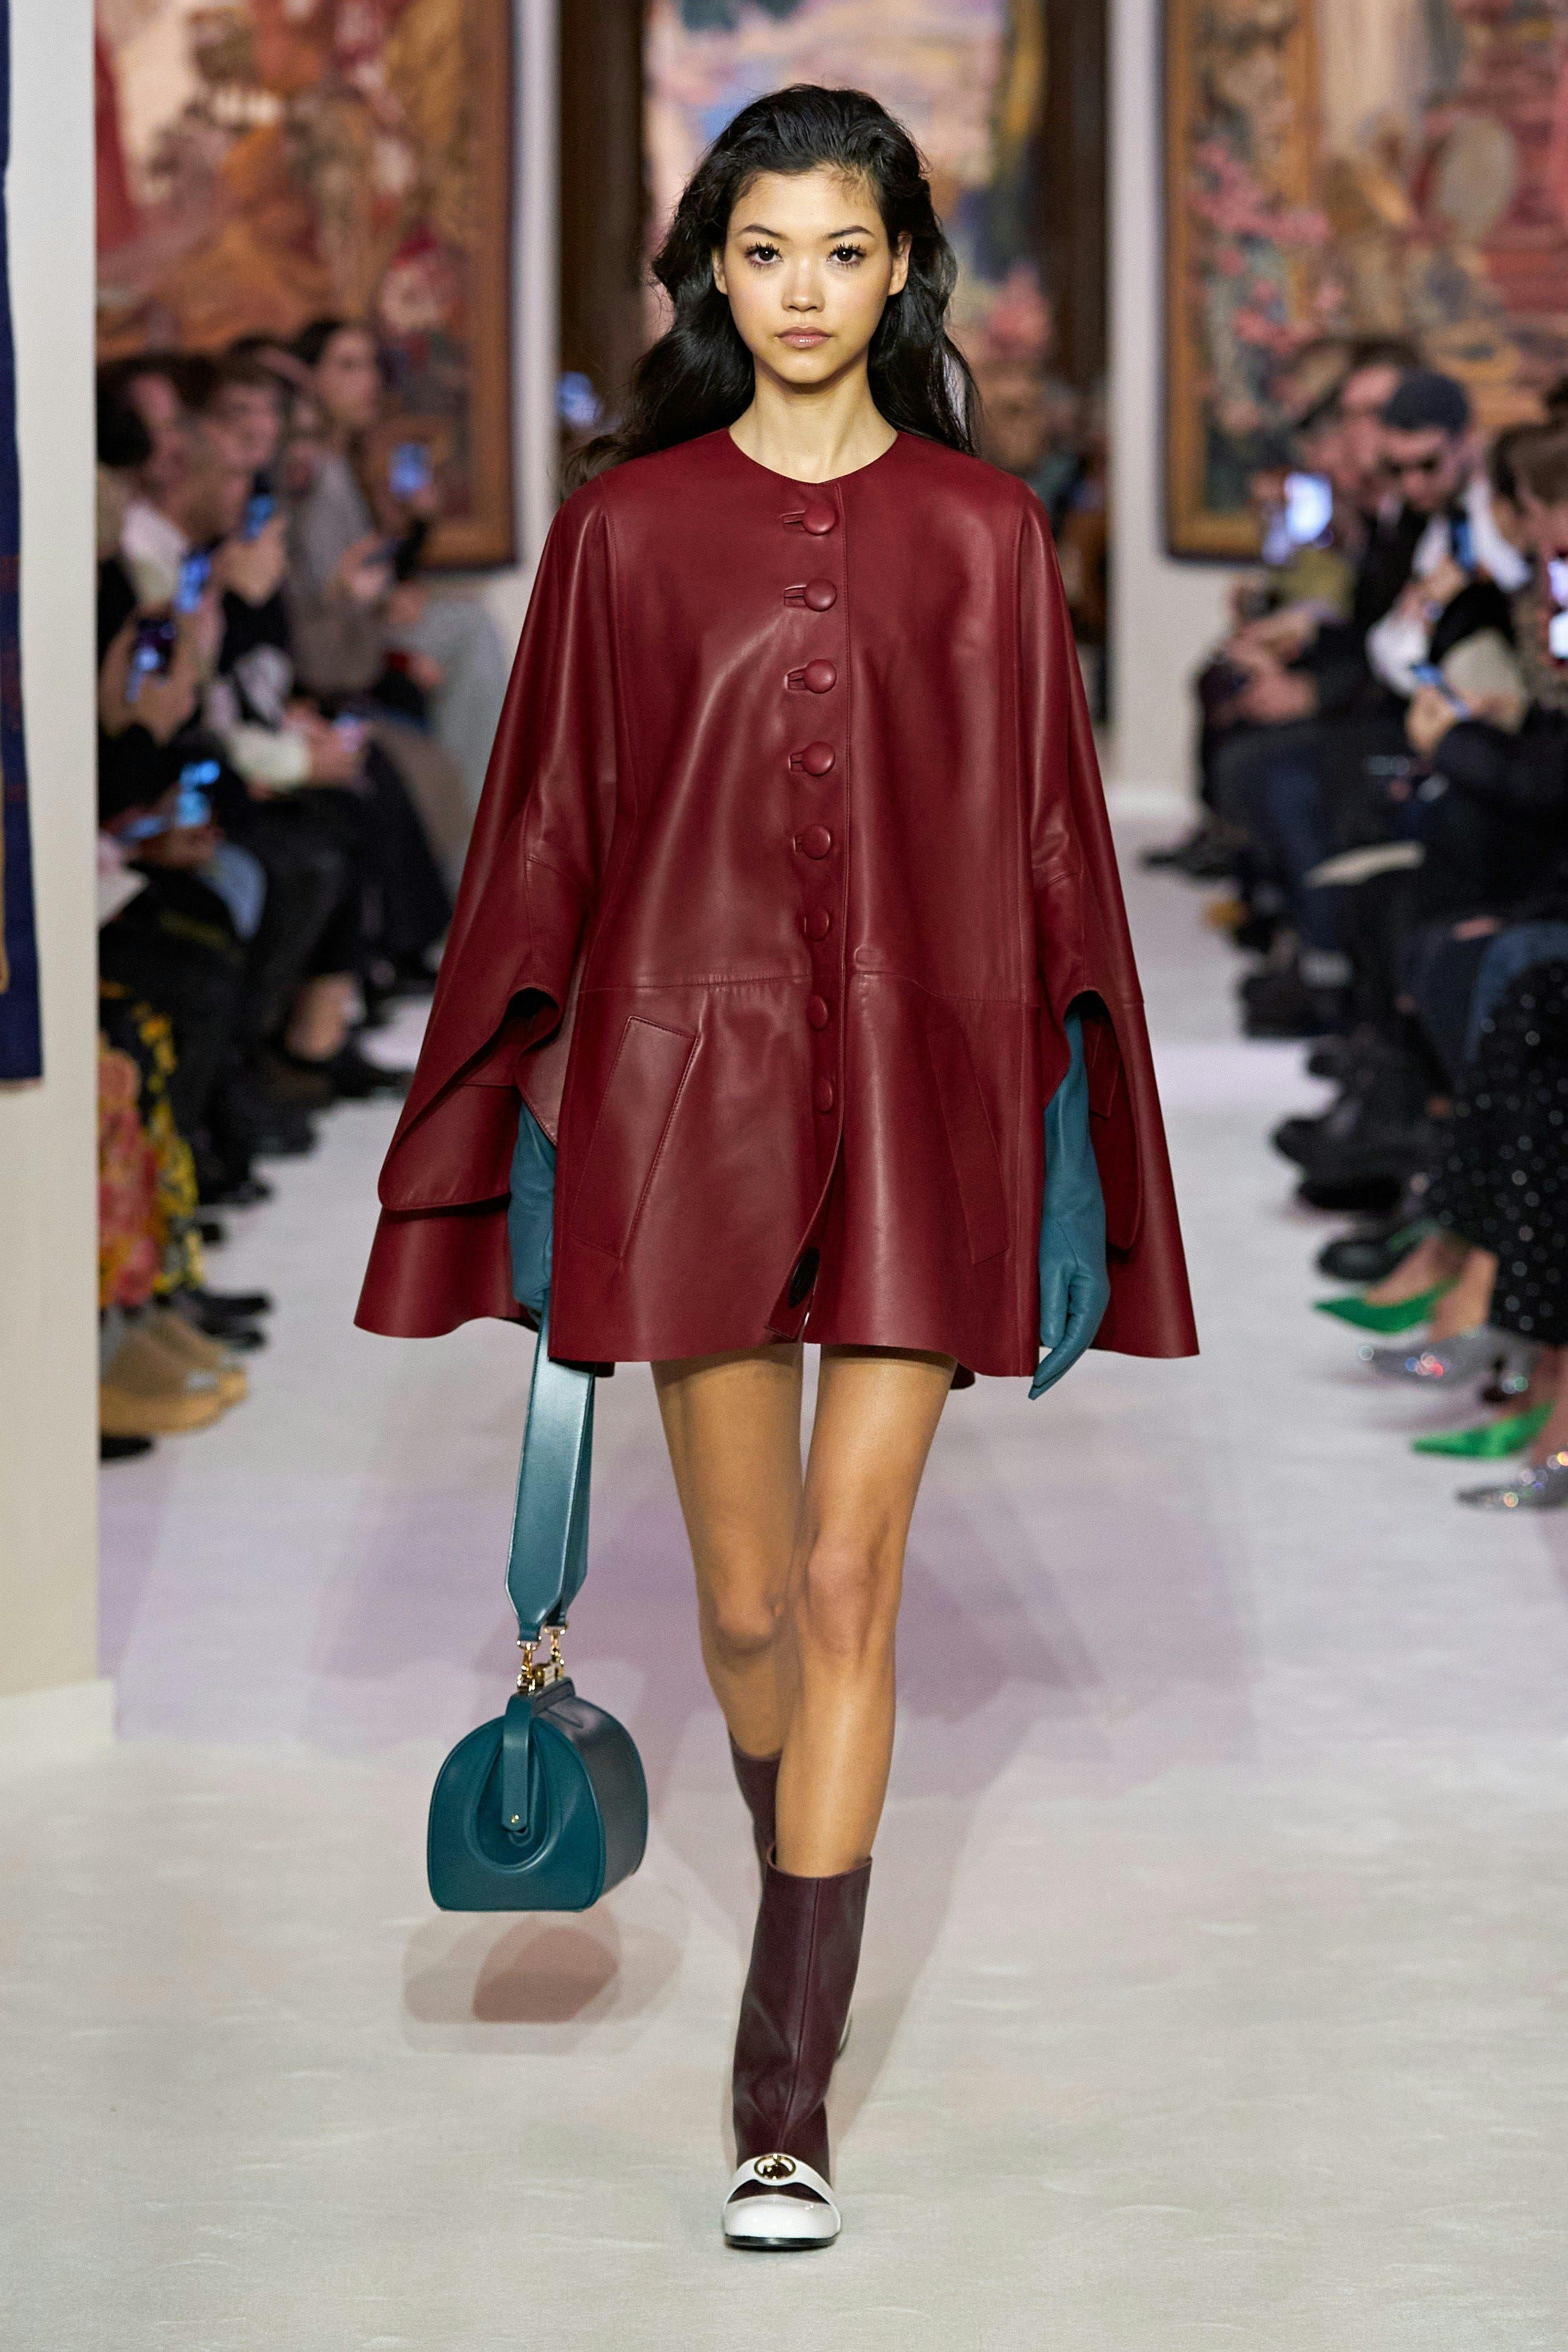 clothing coat apparel person human runway fashion sleeve